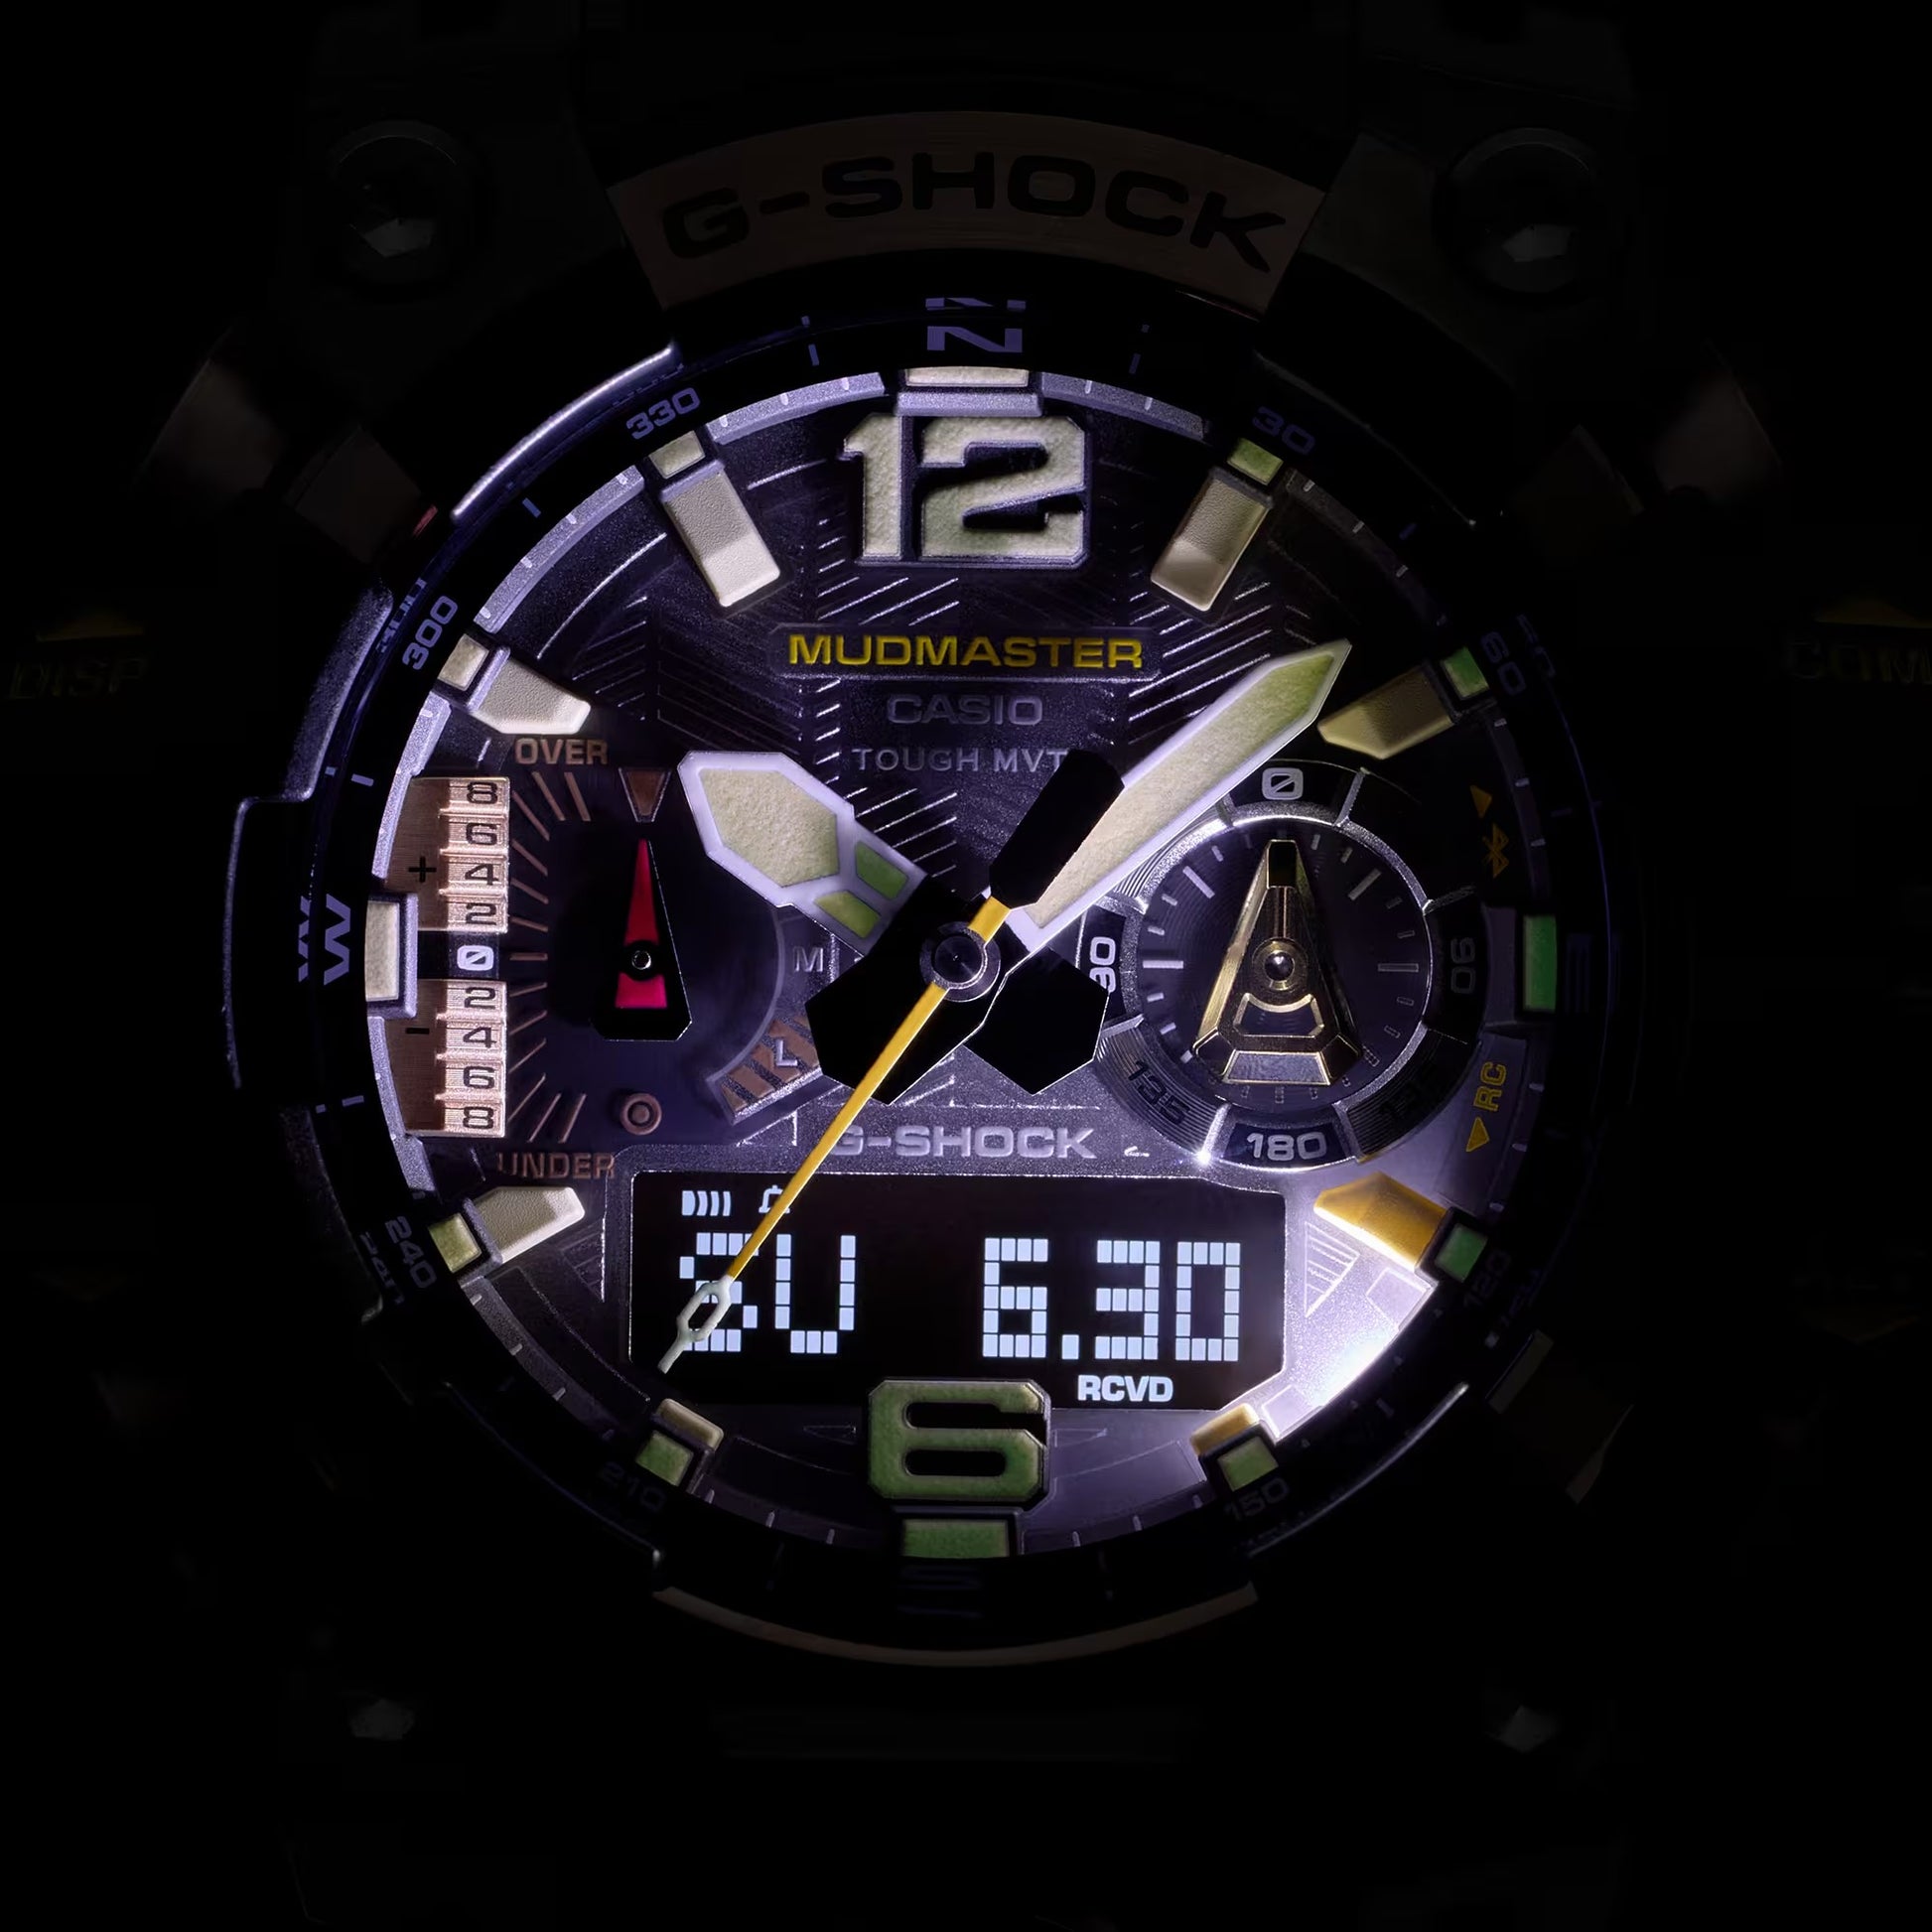 Casio G-Shock Master of G Mudmaster Connected Solar Watch GWGB1000-3A